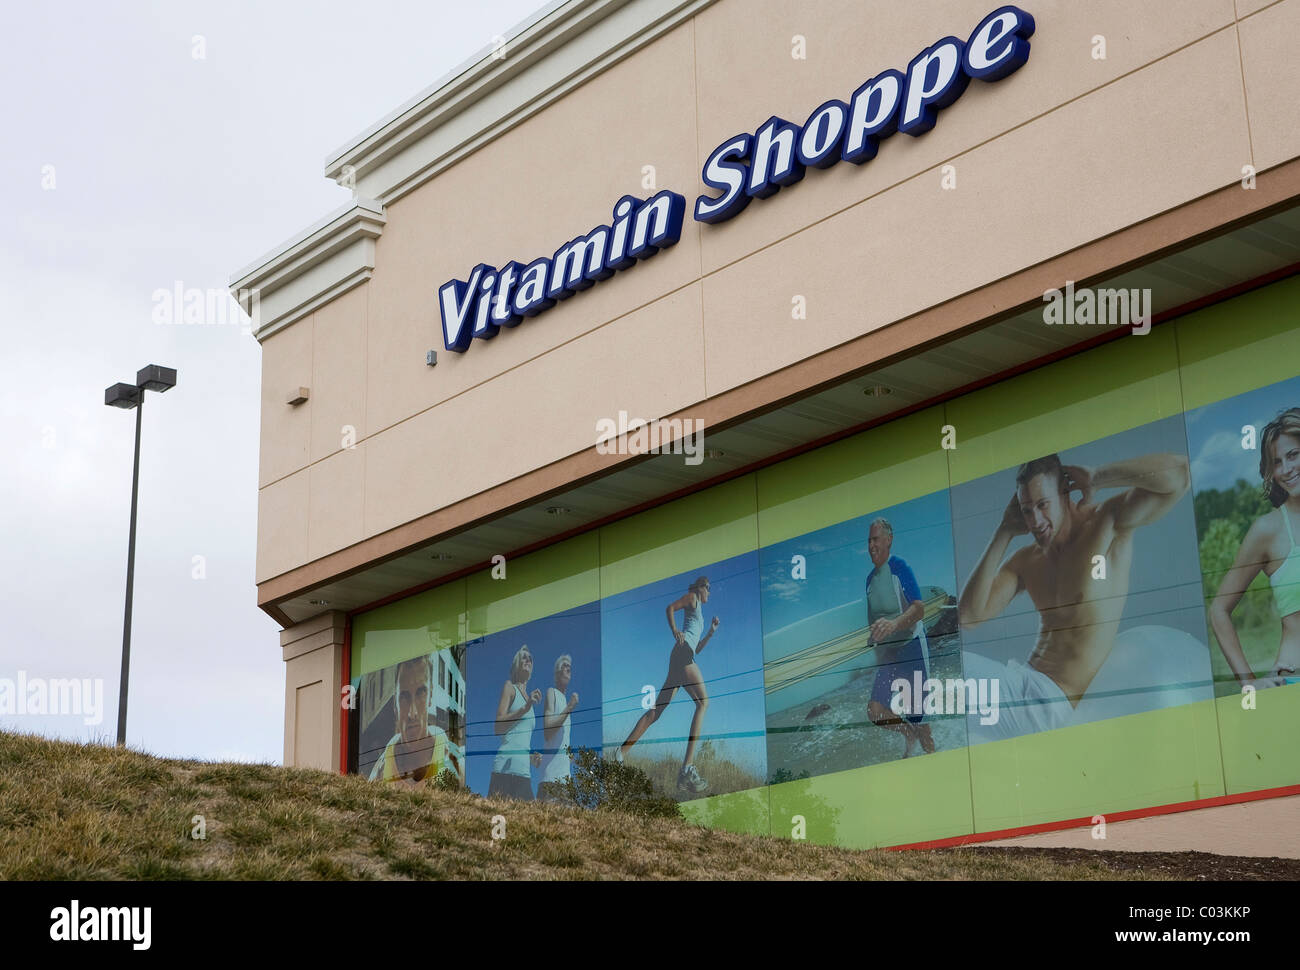 Ladengeschäft Vitamin Shoppe. Stockfoto